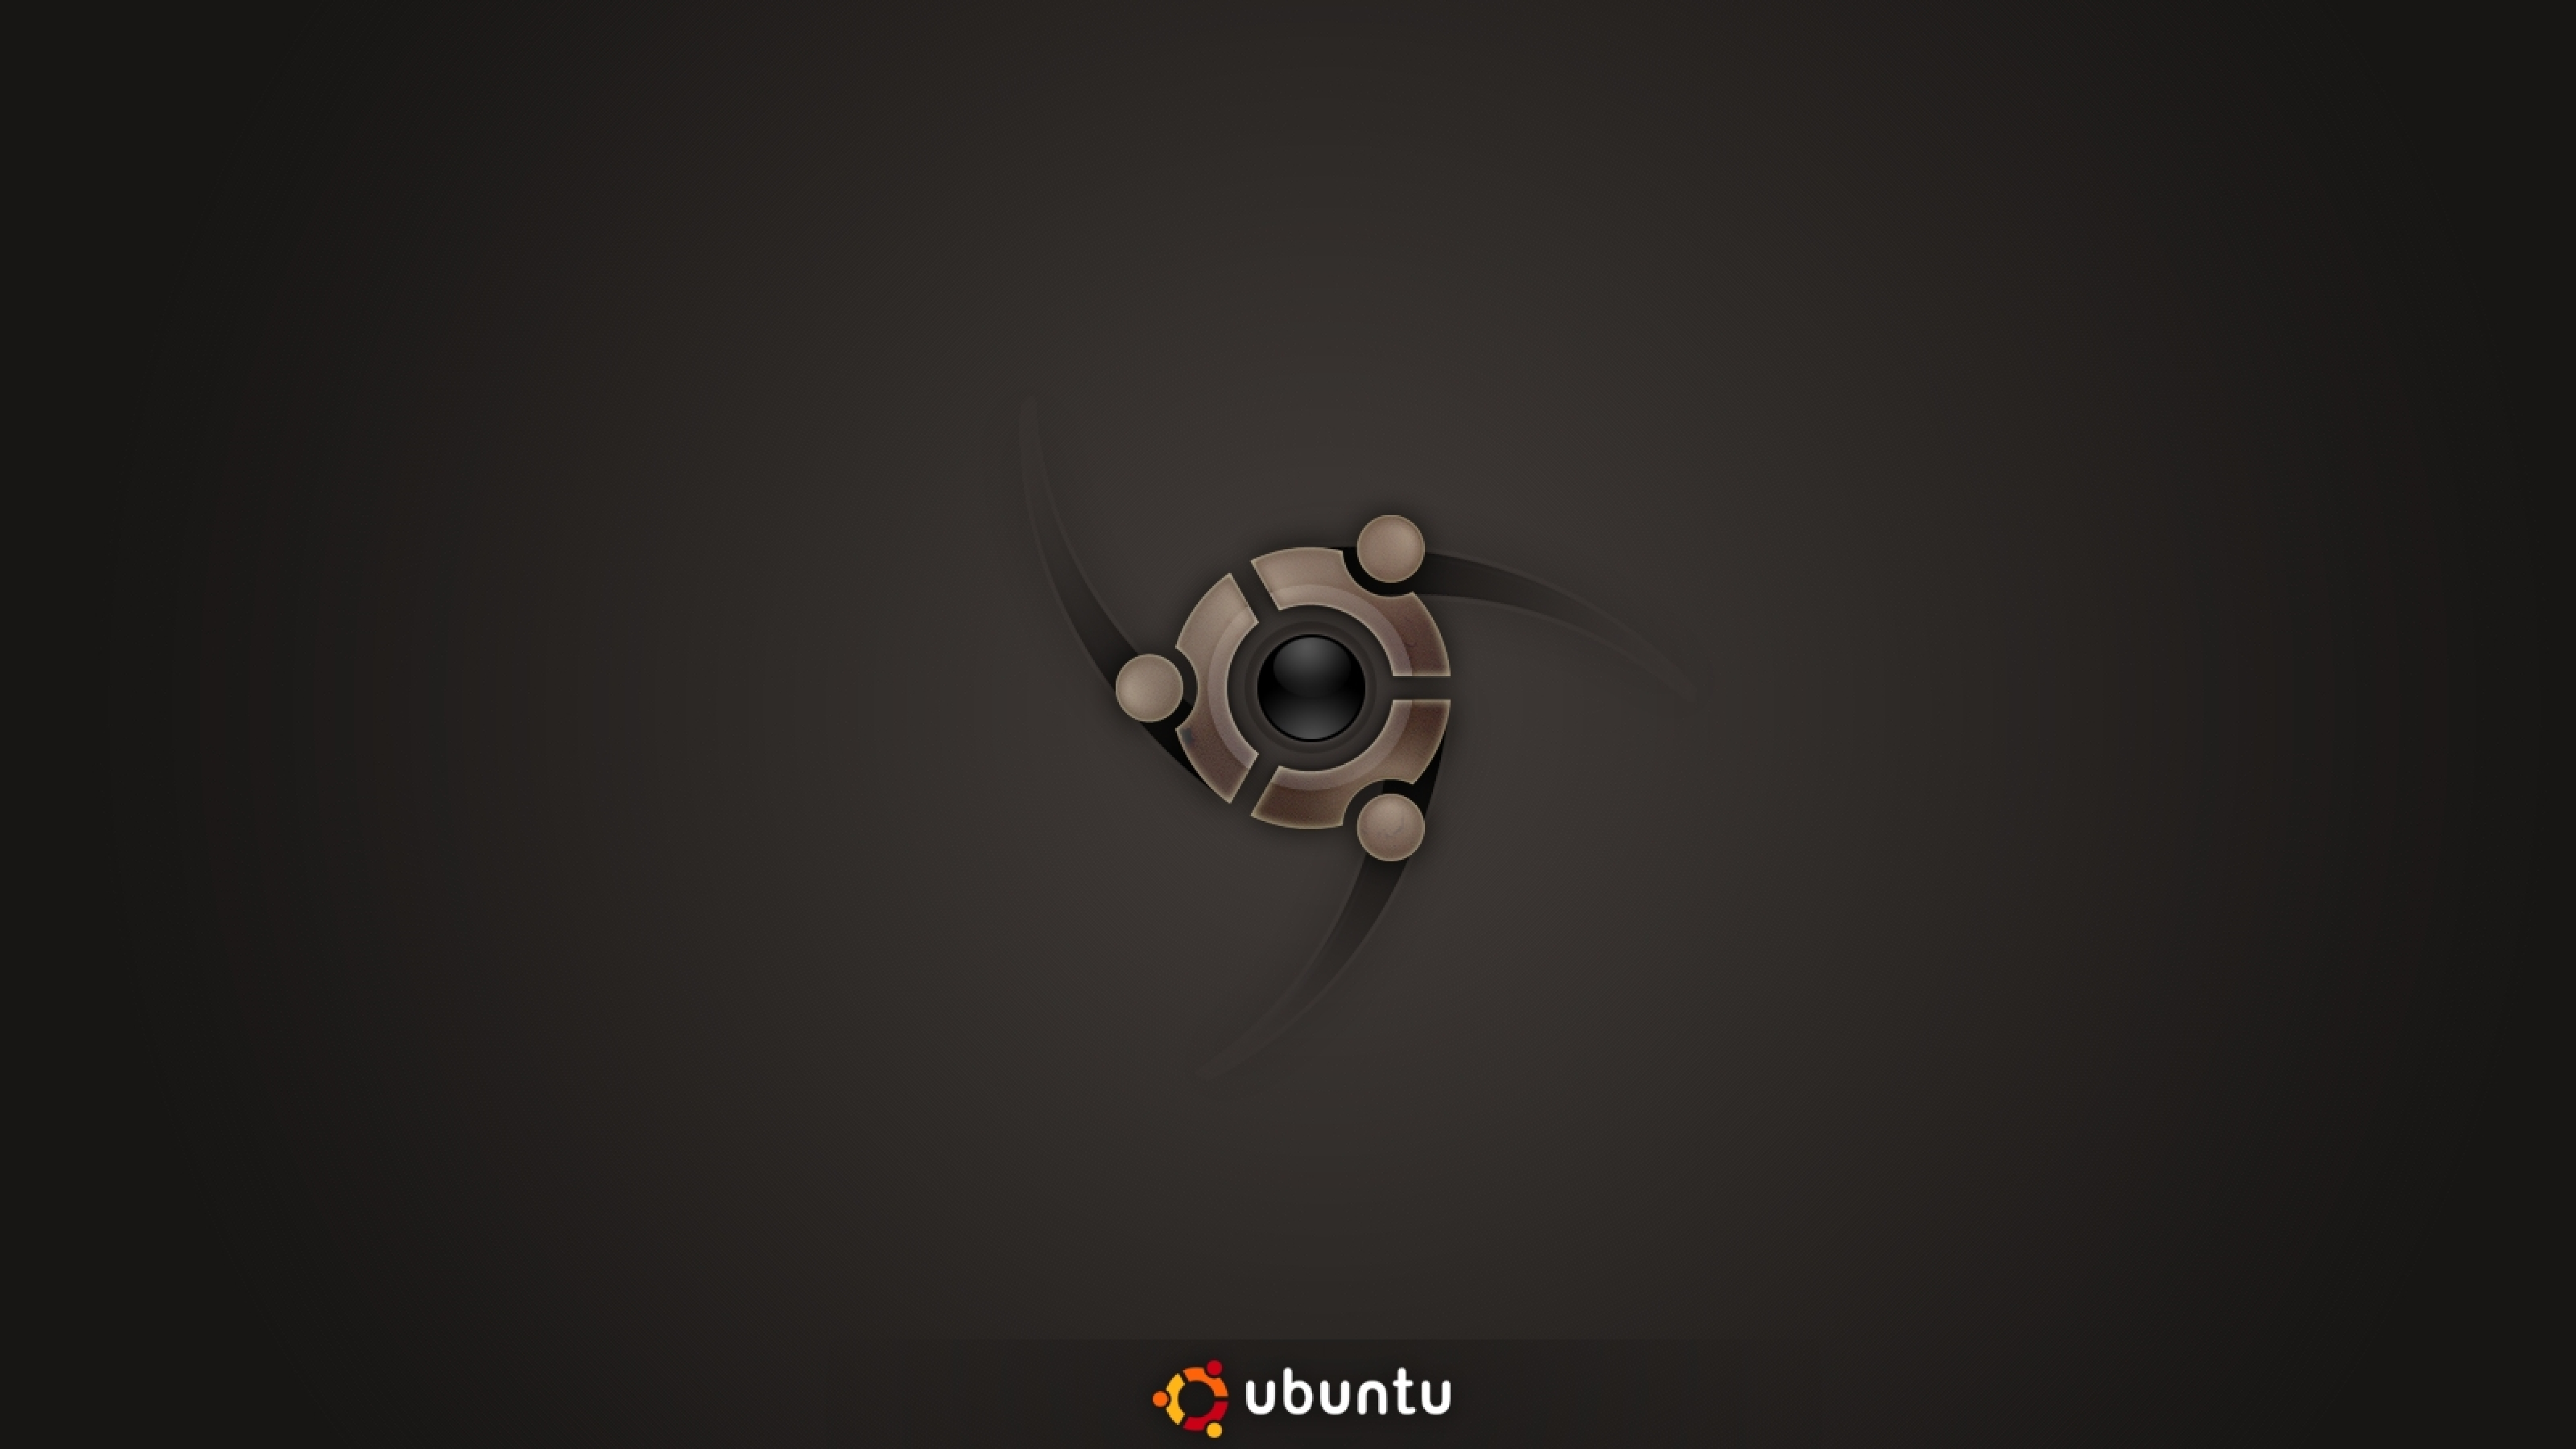 51x Ubuntu Linux Debian 5k Wallpaper Hd Hi Tech 4k Wallpapers Images Photos And Background Wallpapers Den